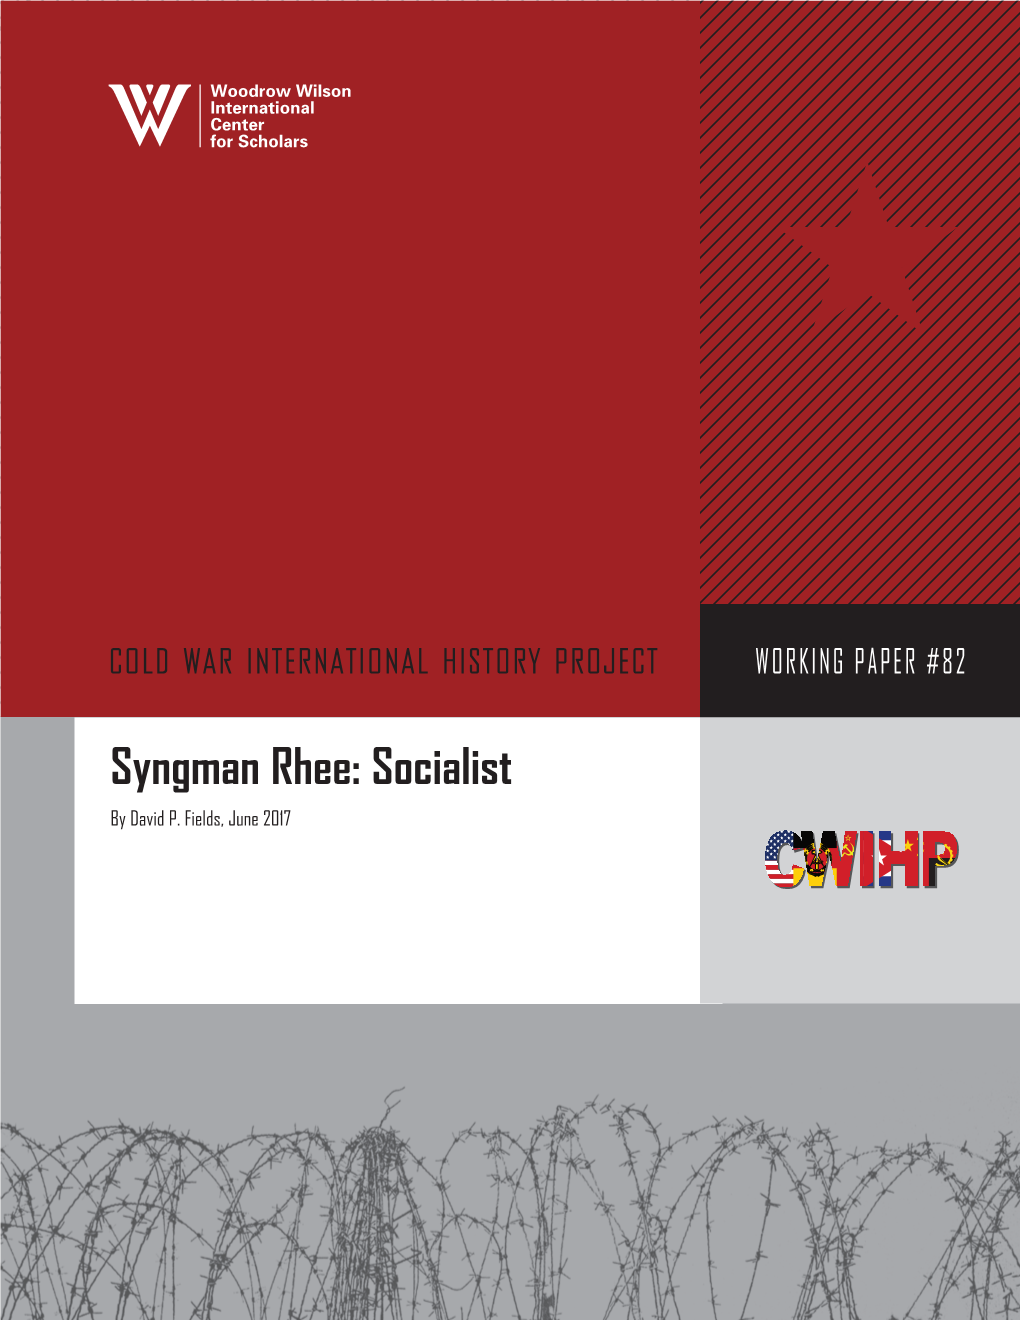 Syngman Rhee: Socialist by David P